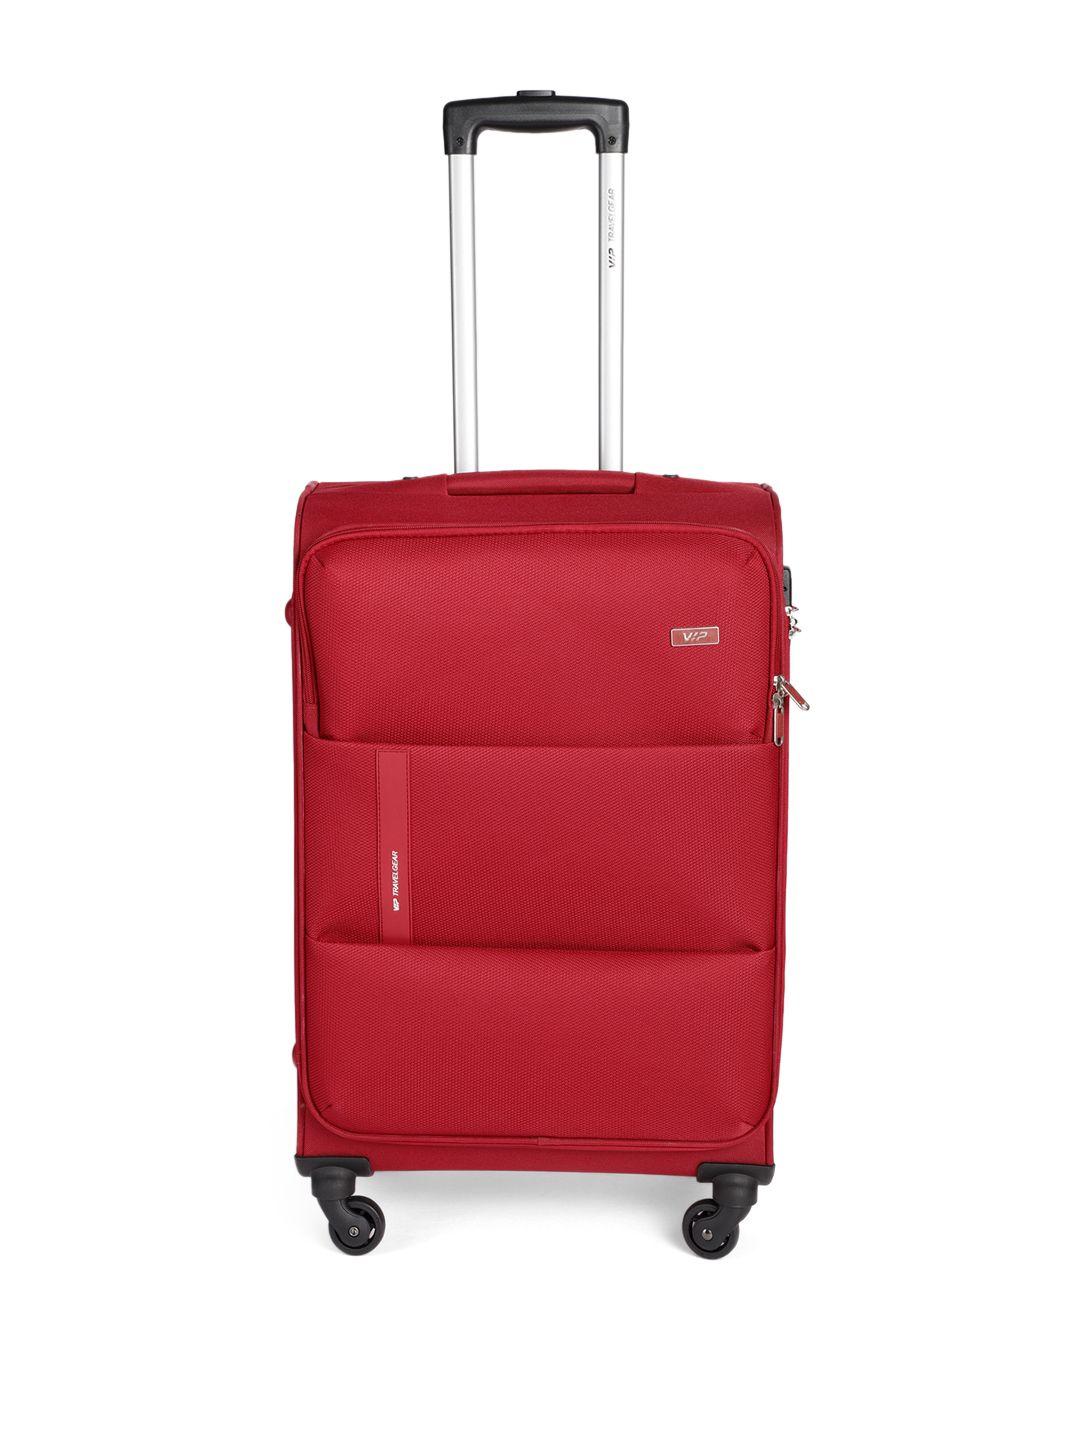 vip widget solid medium 360 degree rotatable trolley suitcase